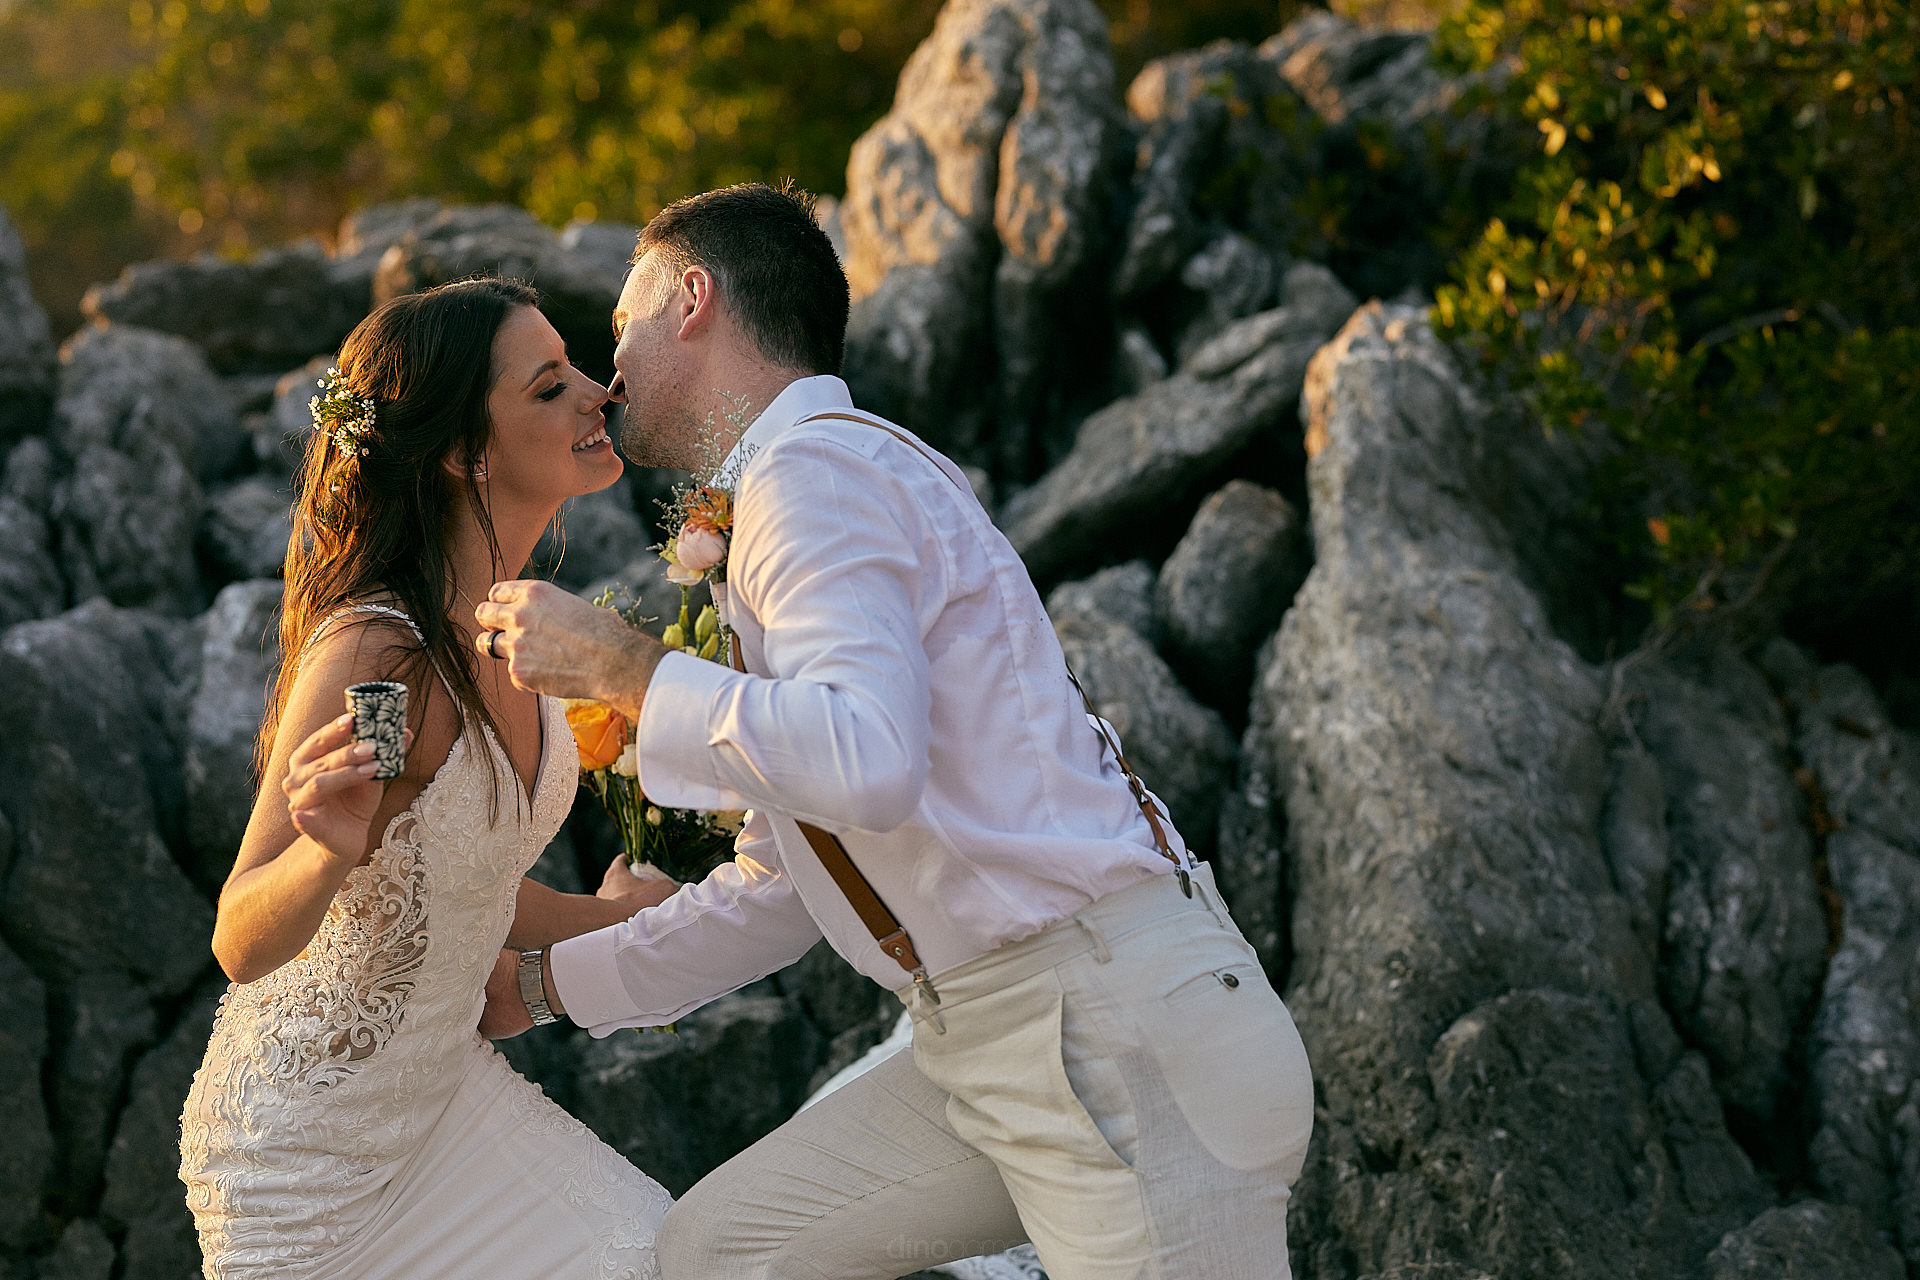 Unique Destination Wedding Experiences Through Stunning Photos